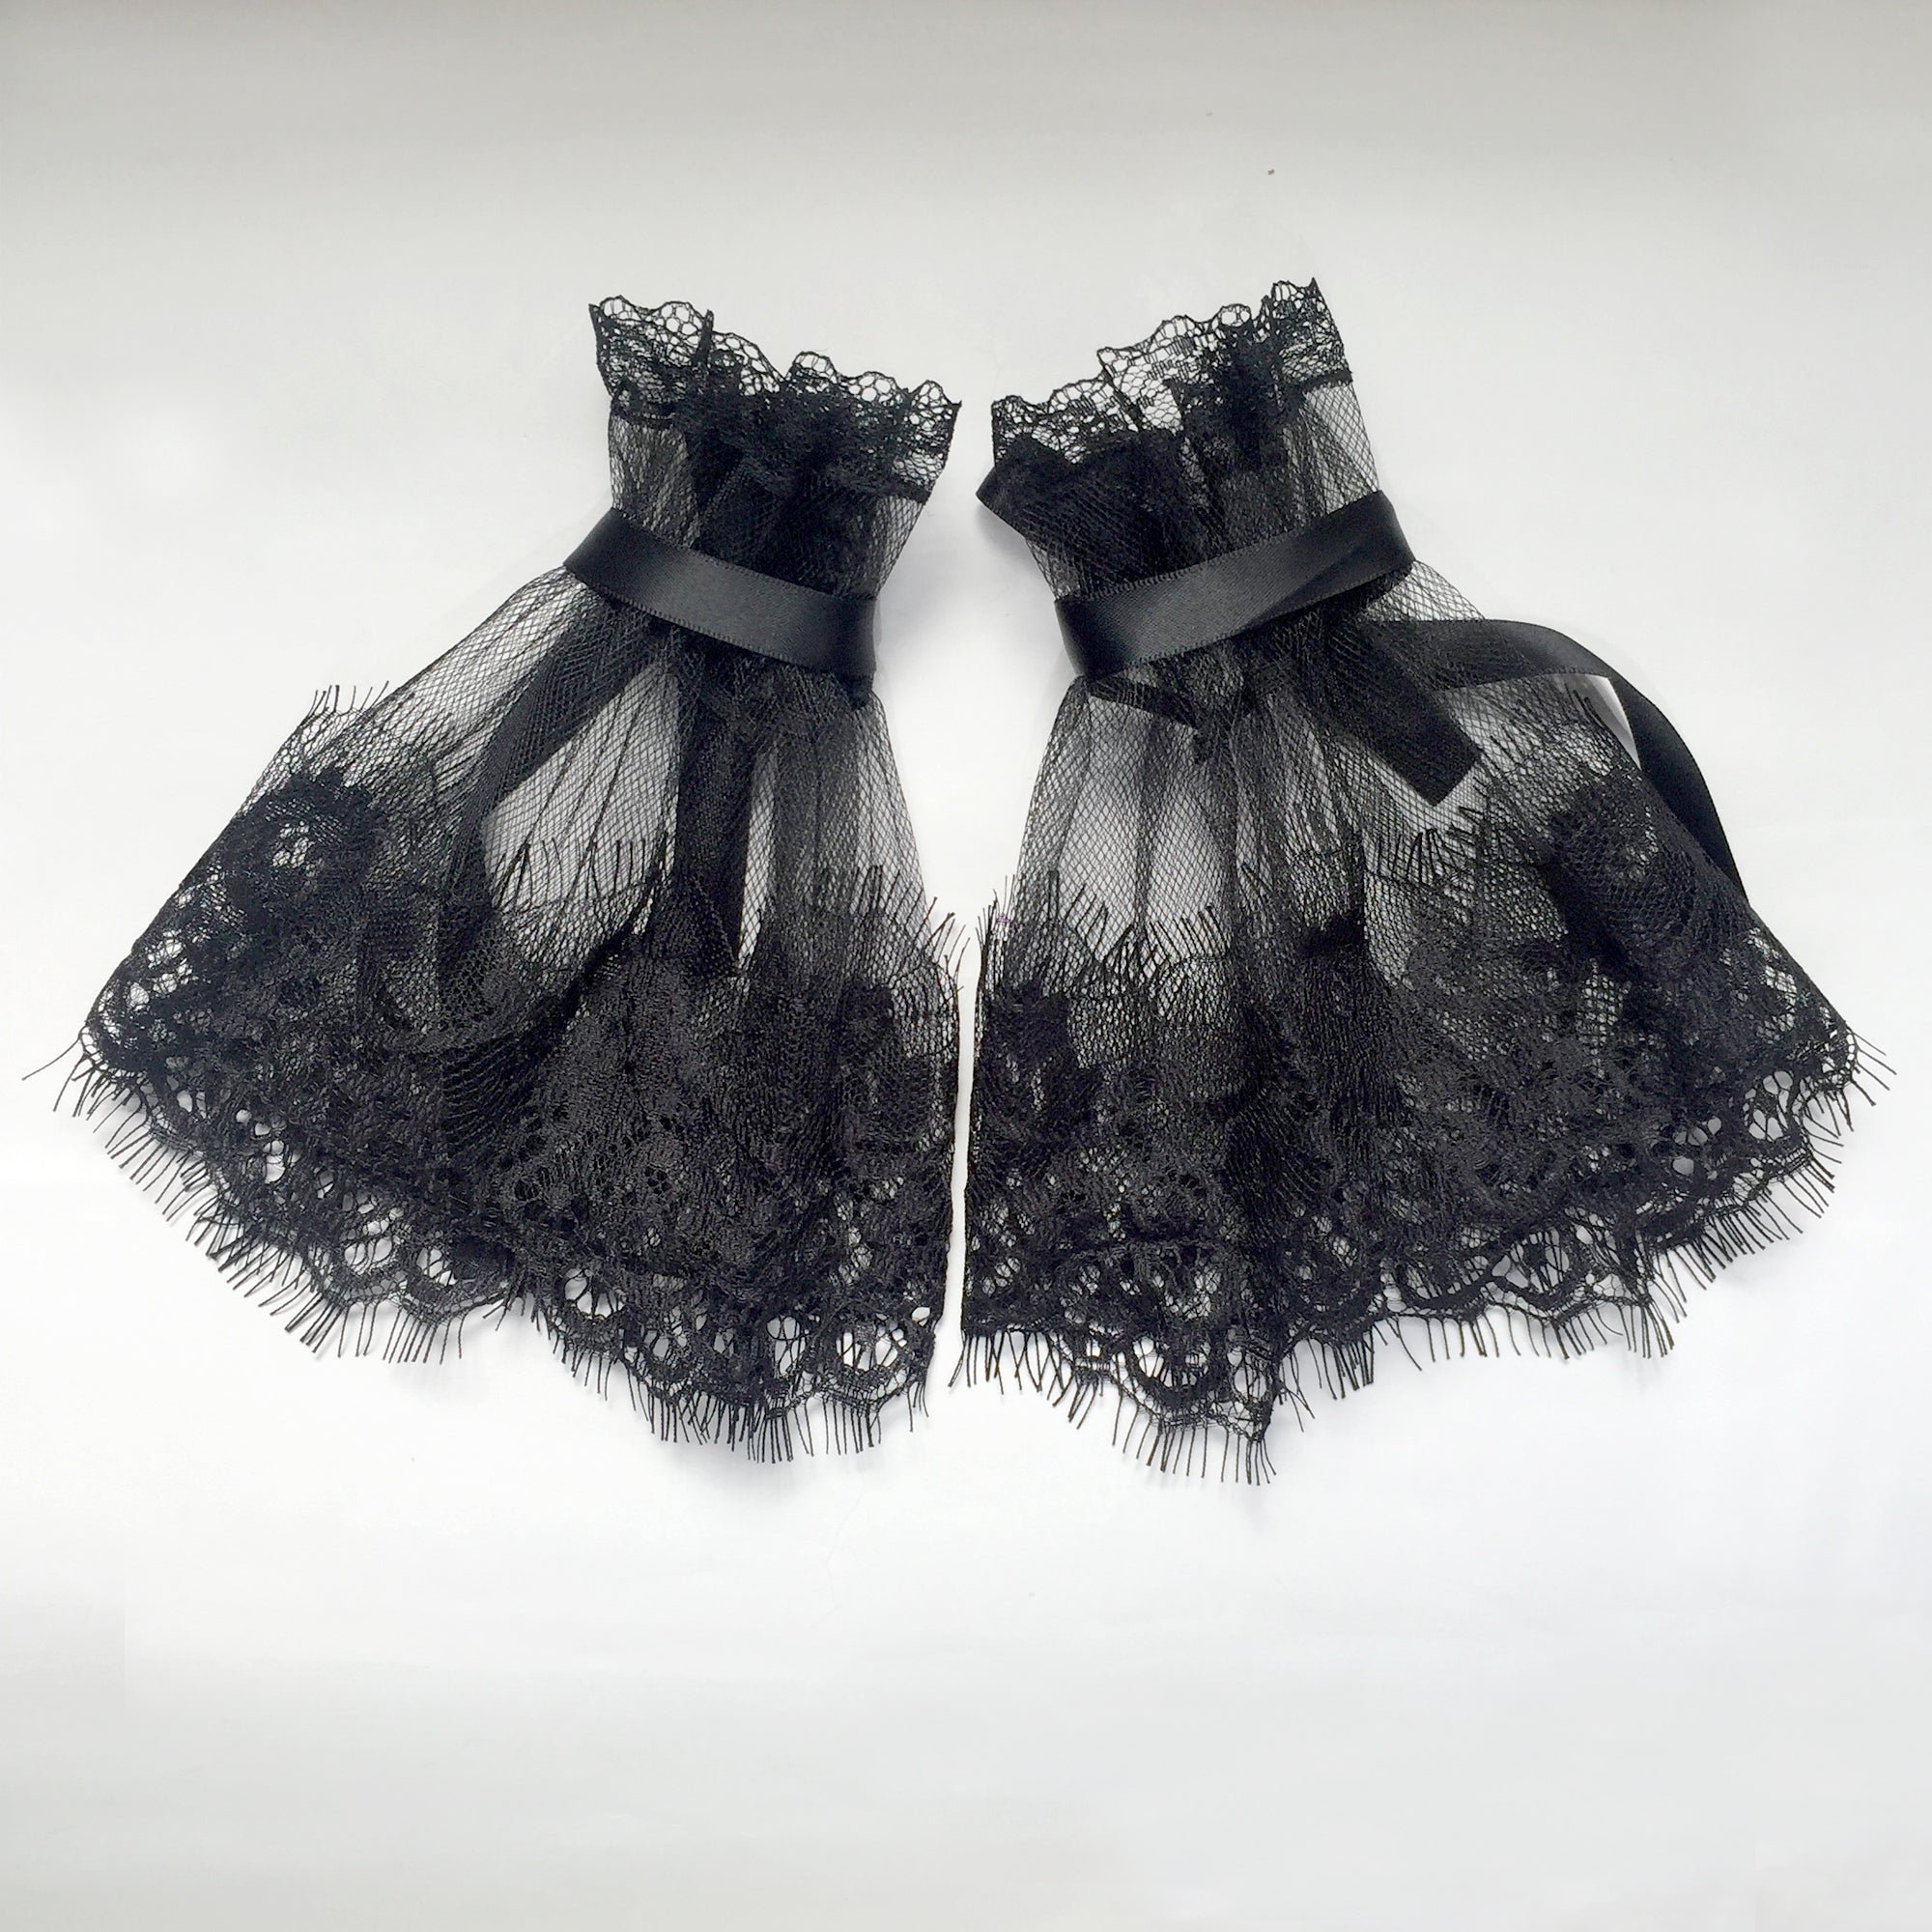 Black Lace Gloves Women, Black Lace Fingerless Wedding Gloves, Goth, Victorian, Lolita